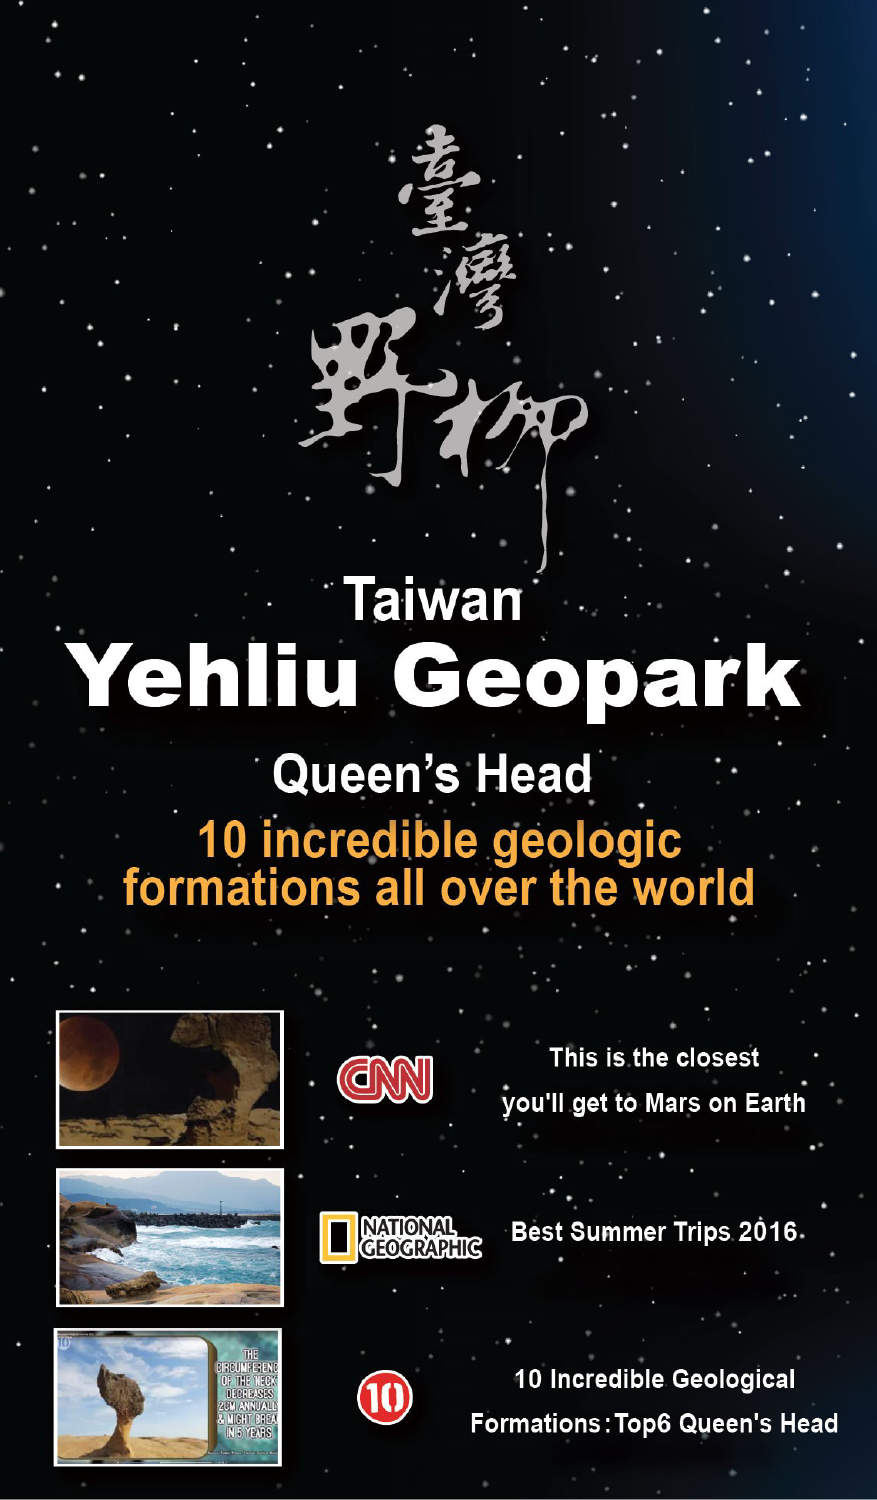 Yehliu Geopark: Night Gala of Rocks, Lights and Shadows